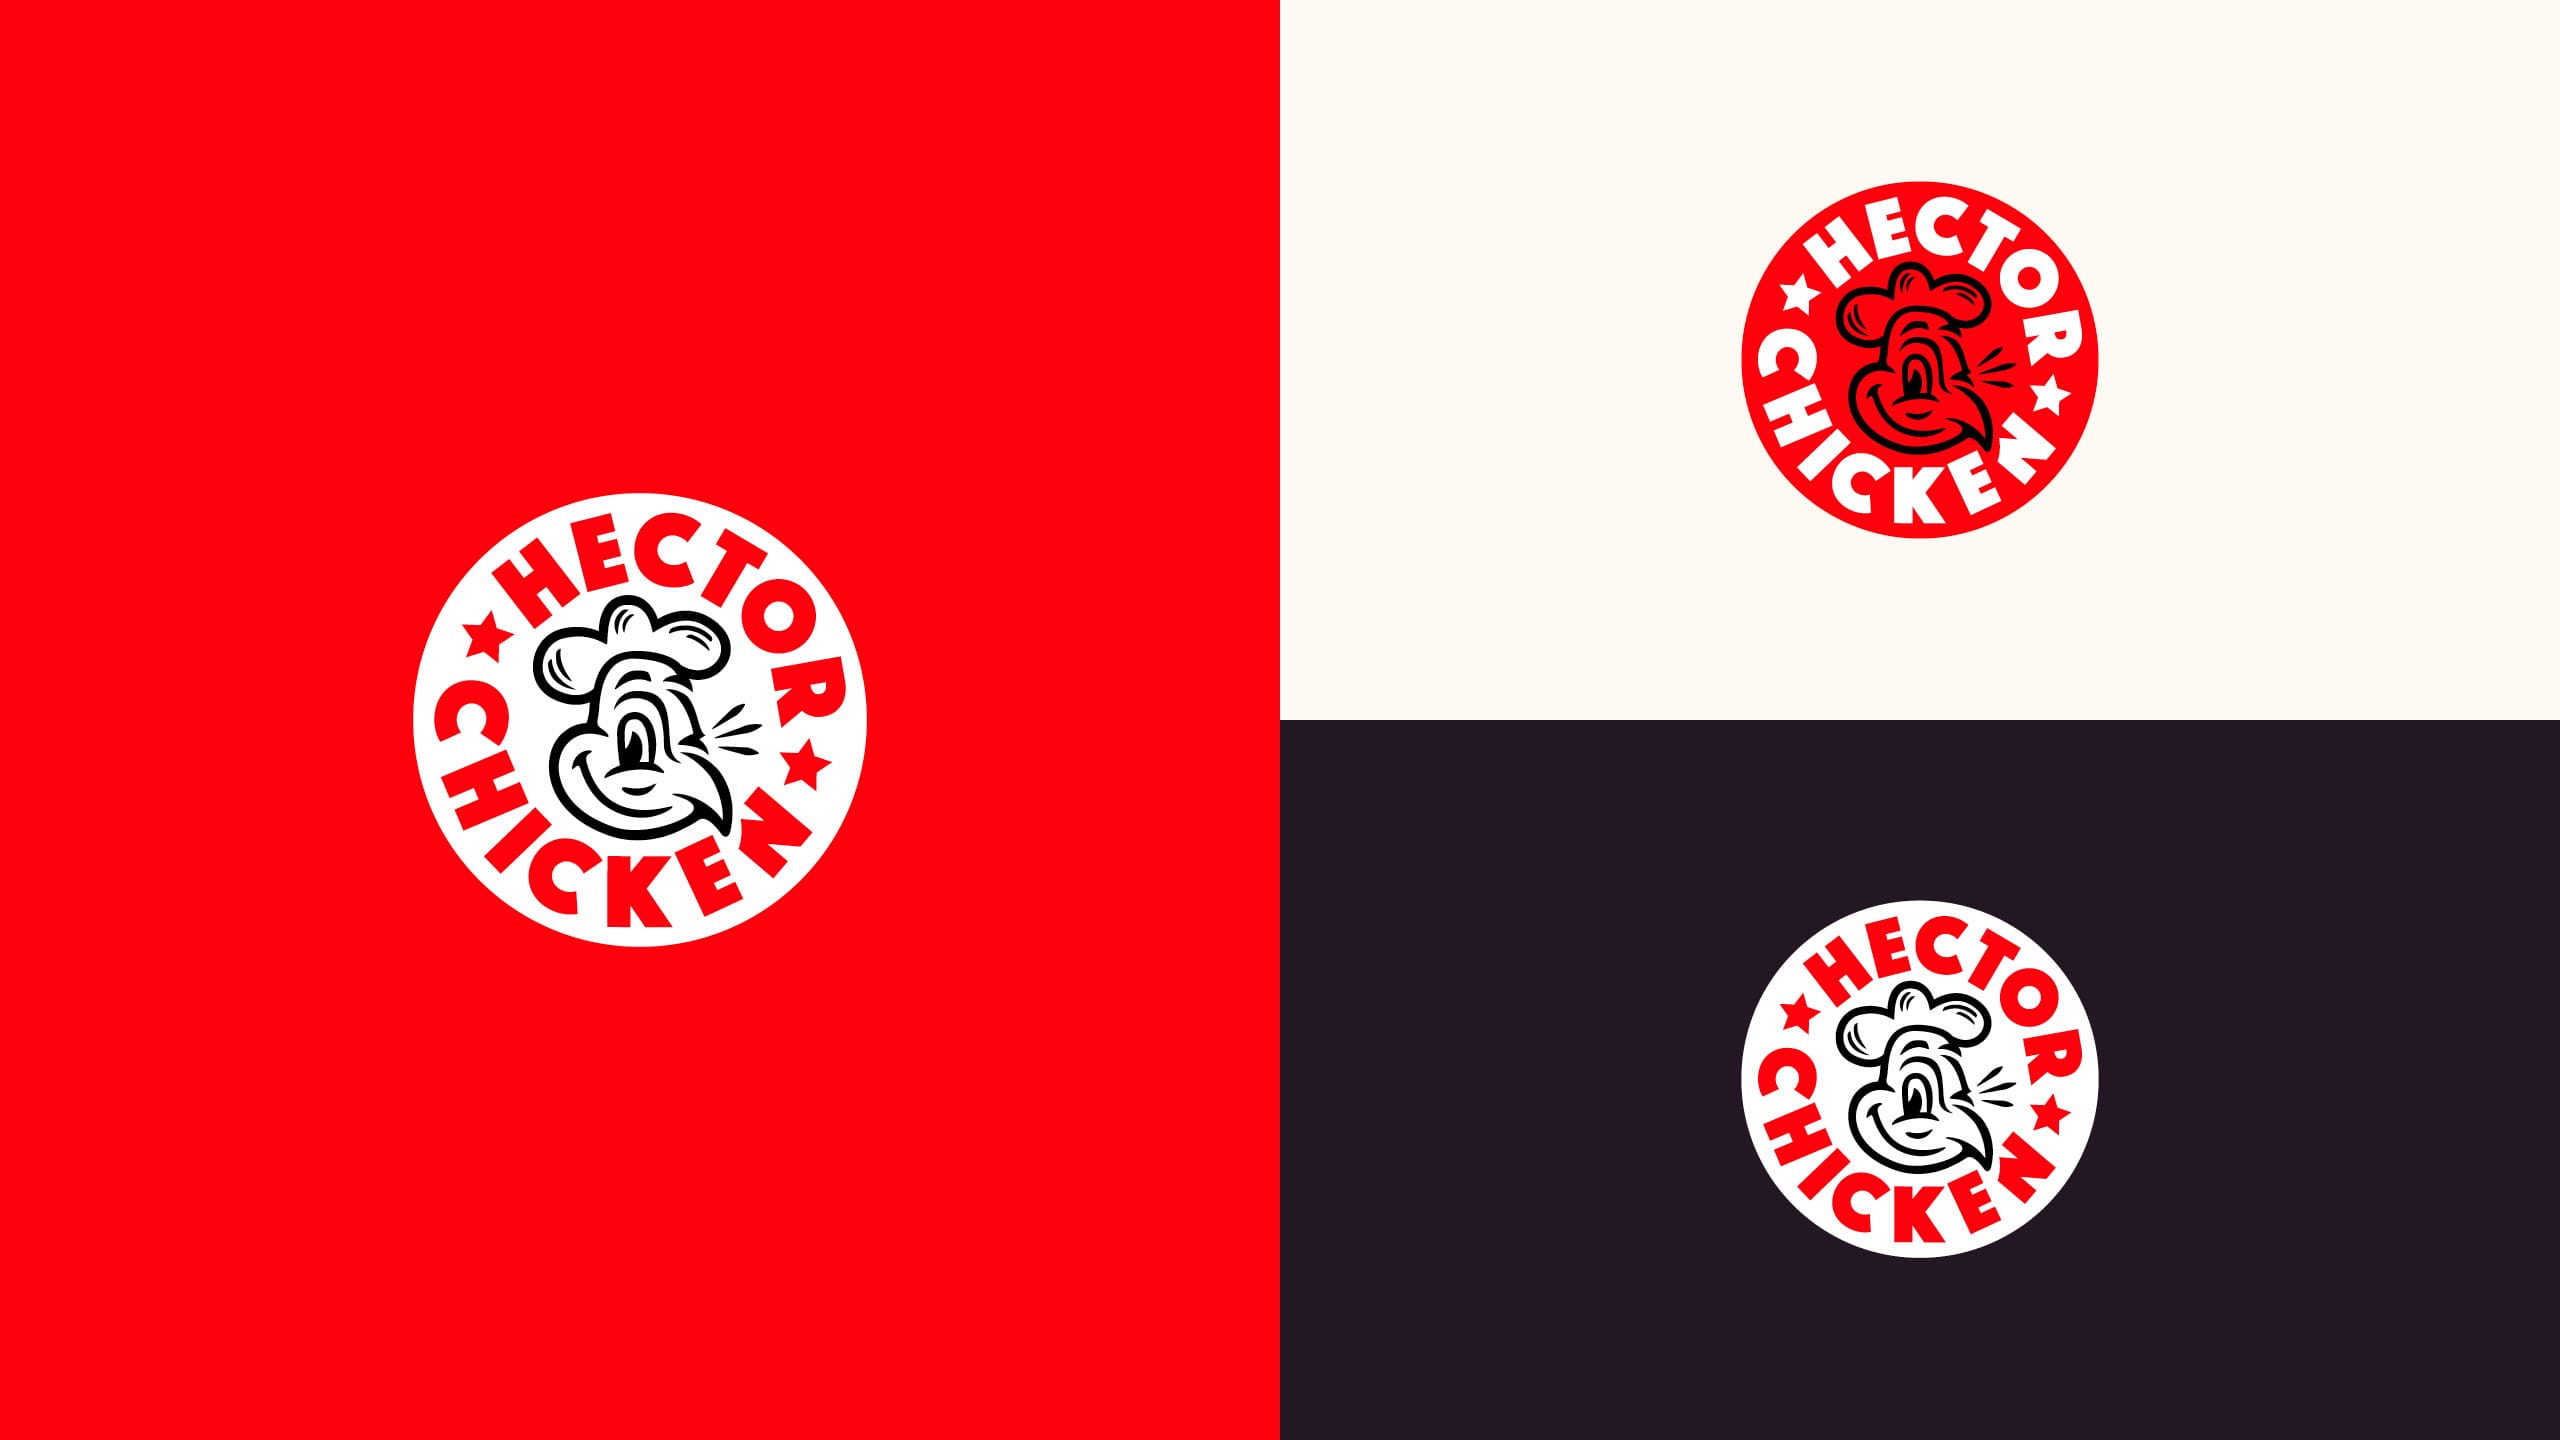 Hector-chicken-branding-logo-colors